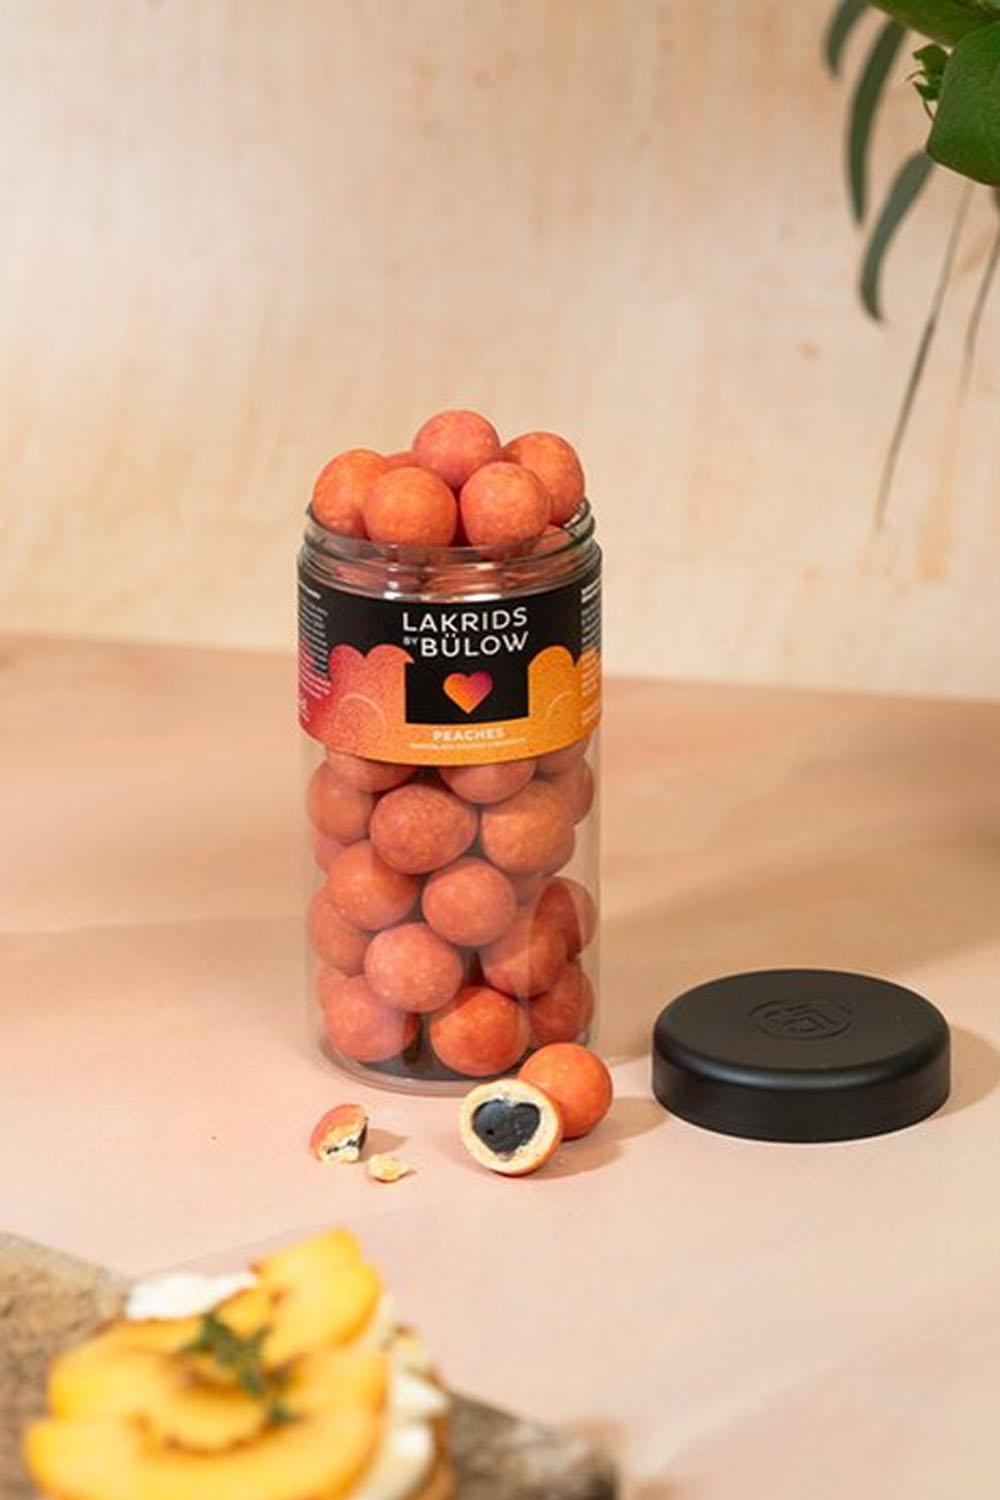 Lakrids Regular Peaches 295 gram